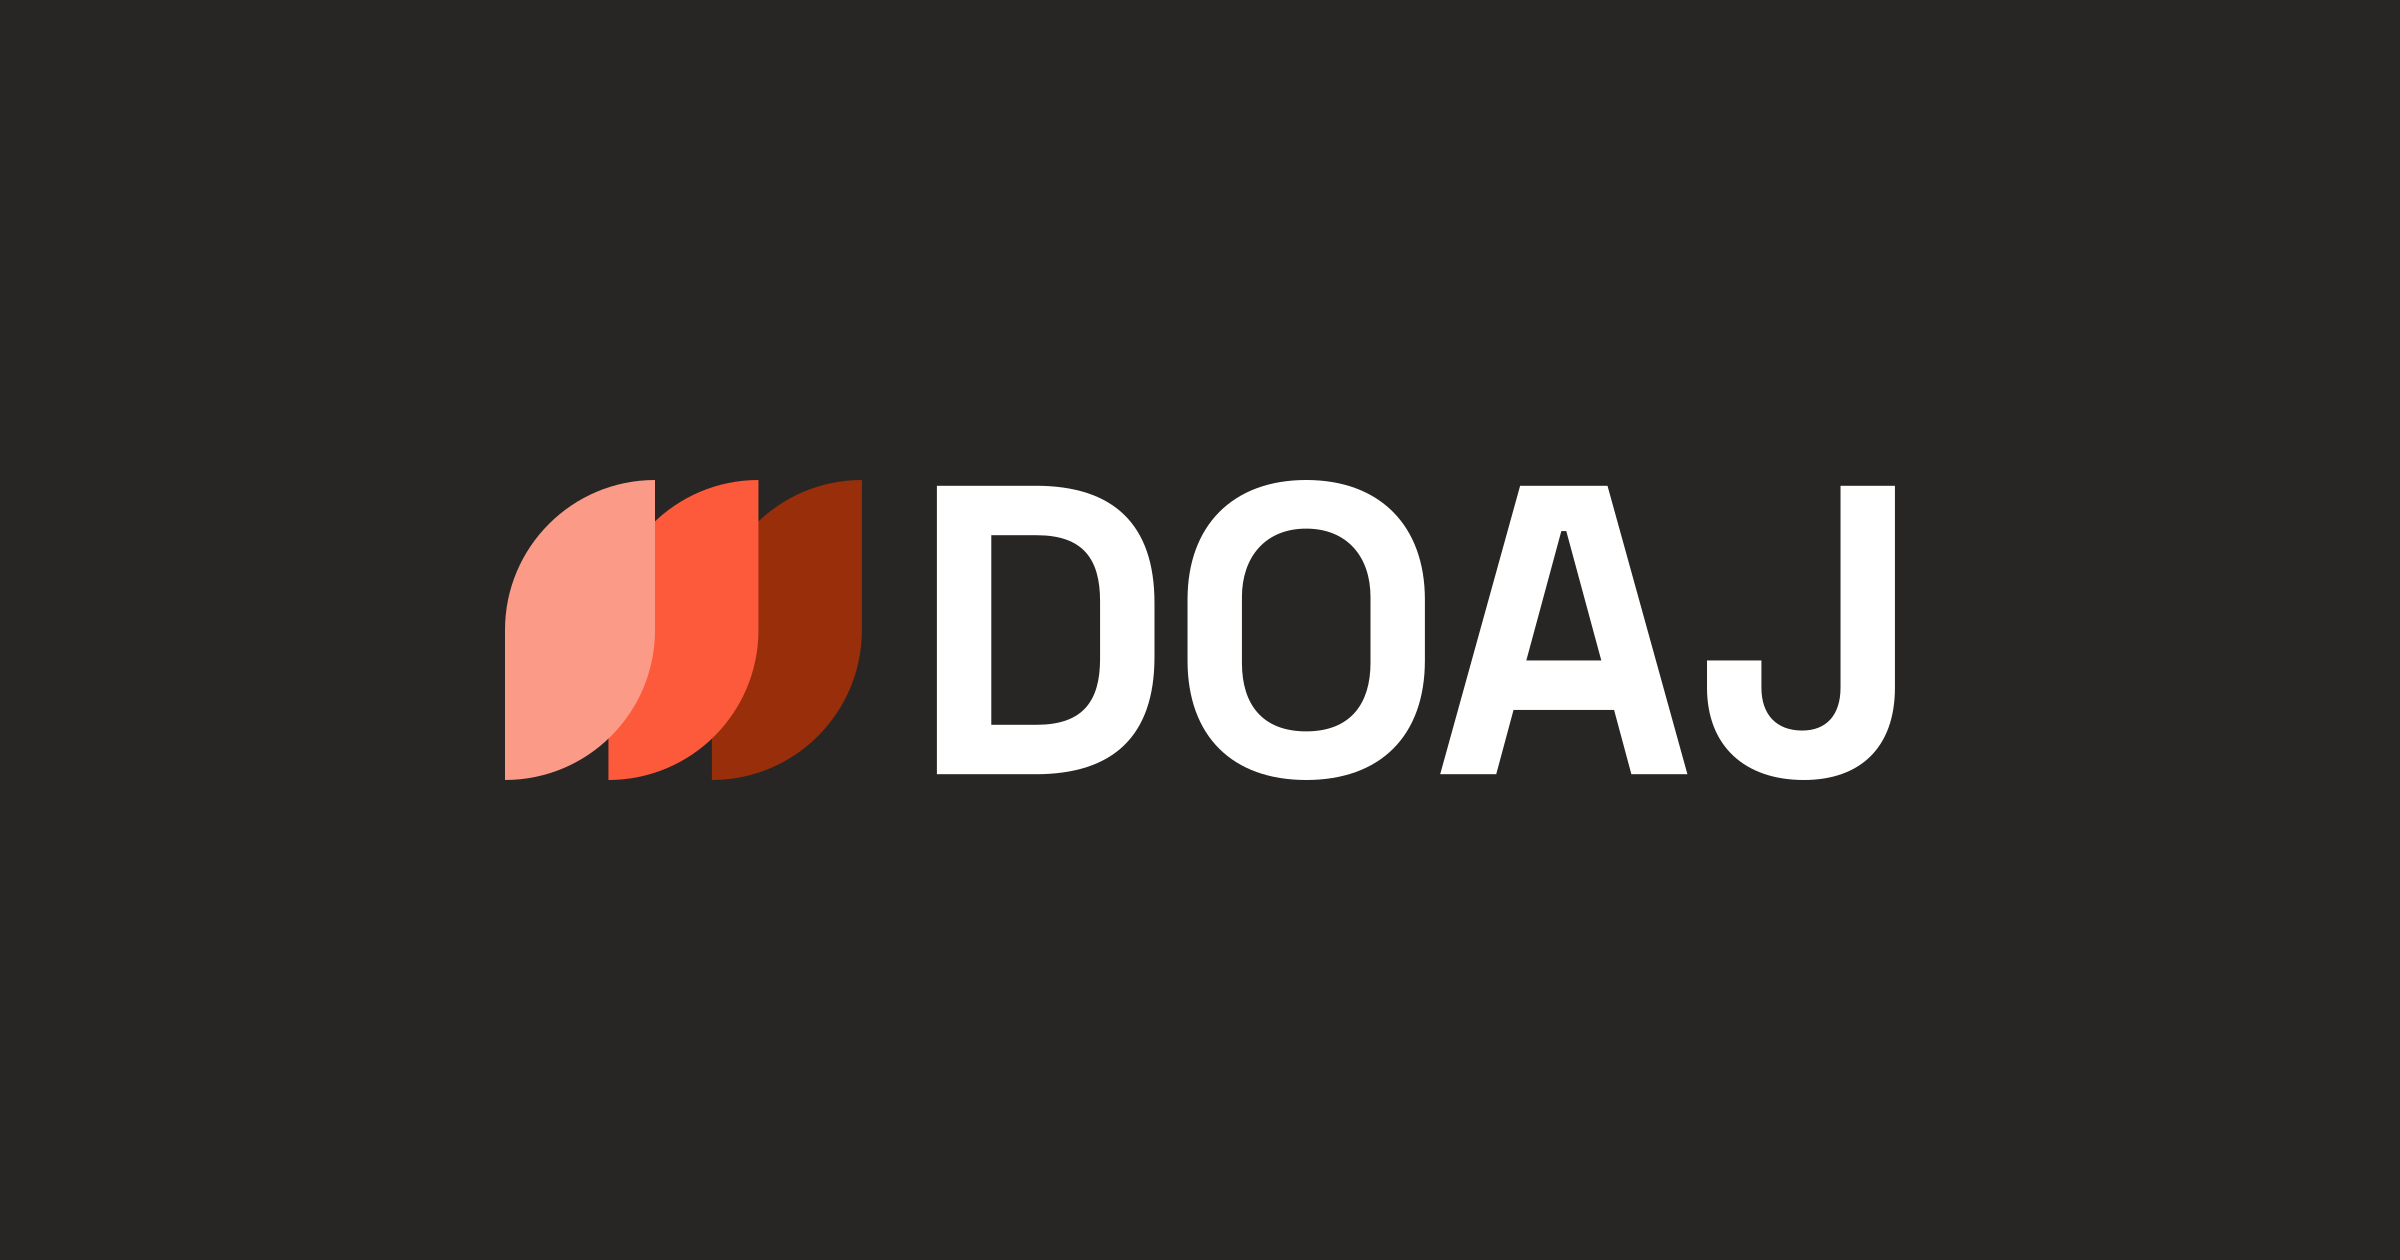 Directory of Open Access Journals – DOAJ